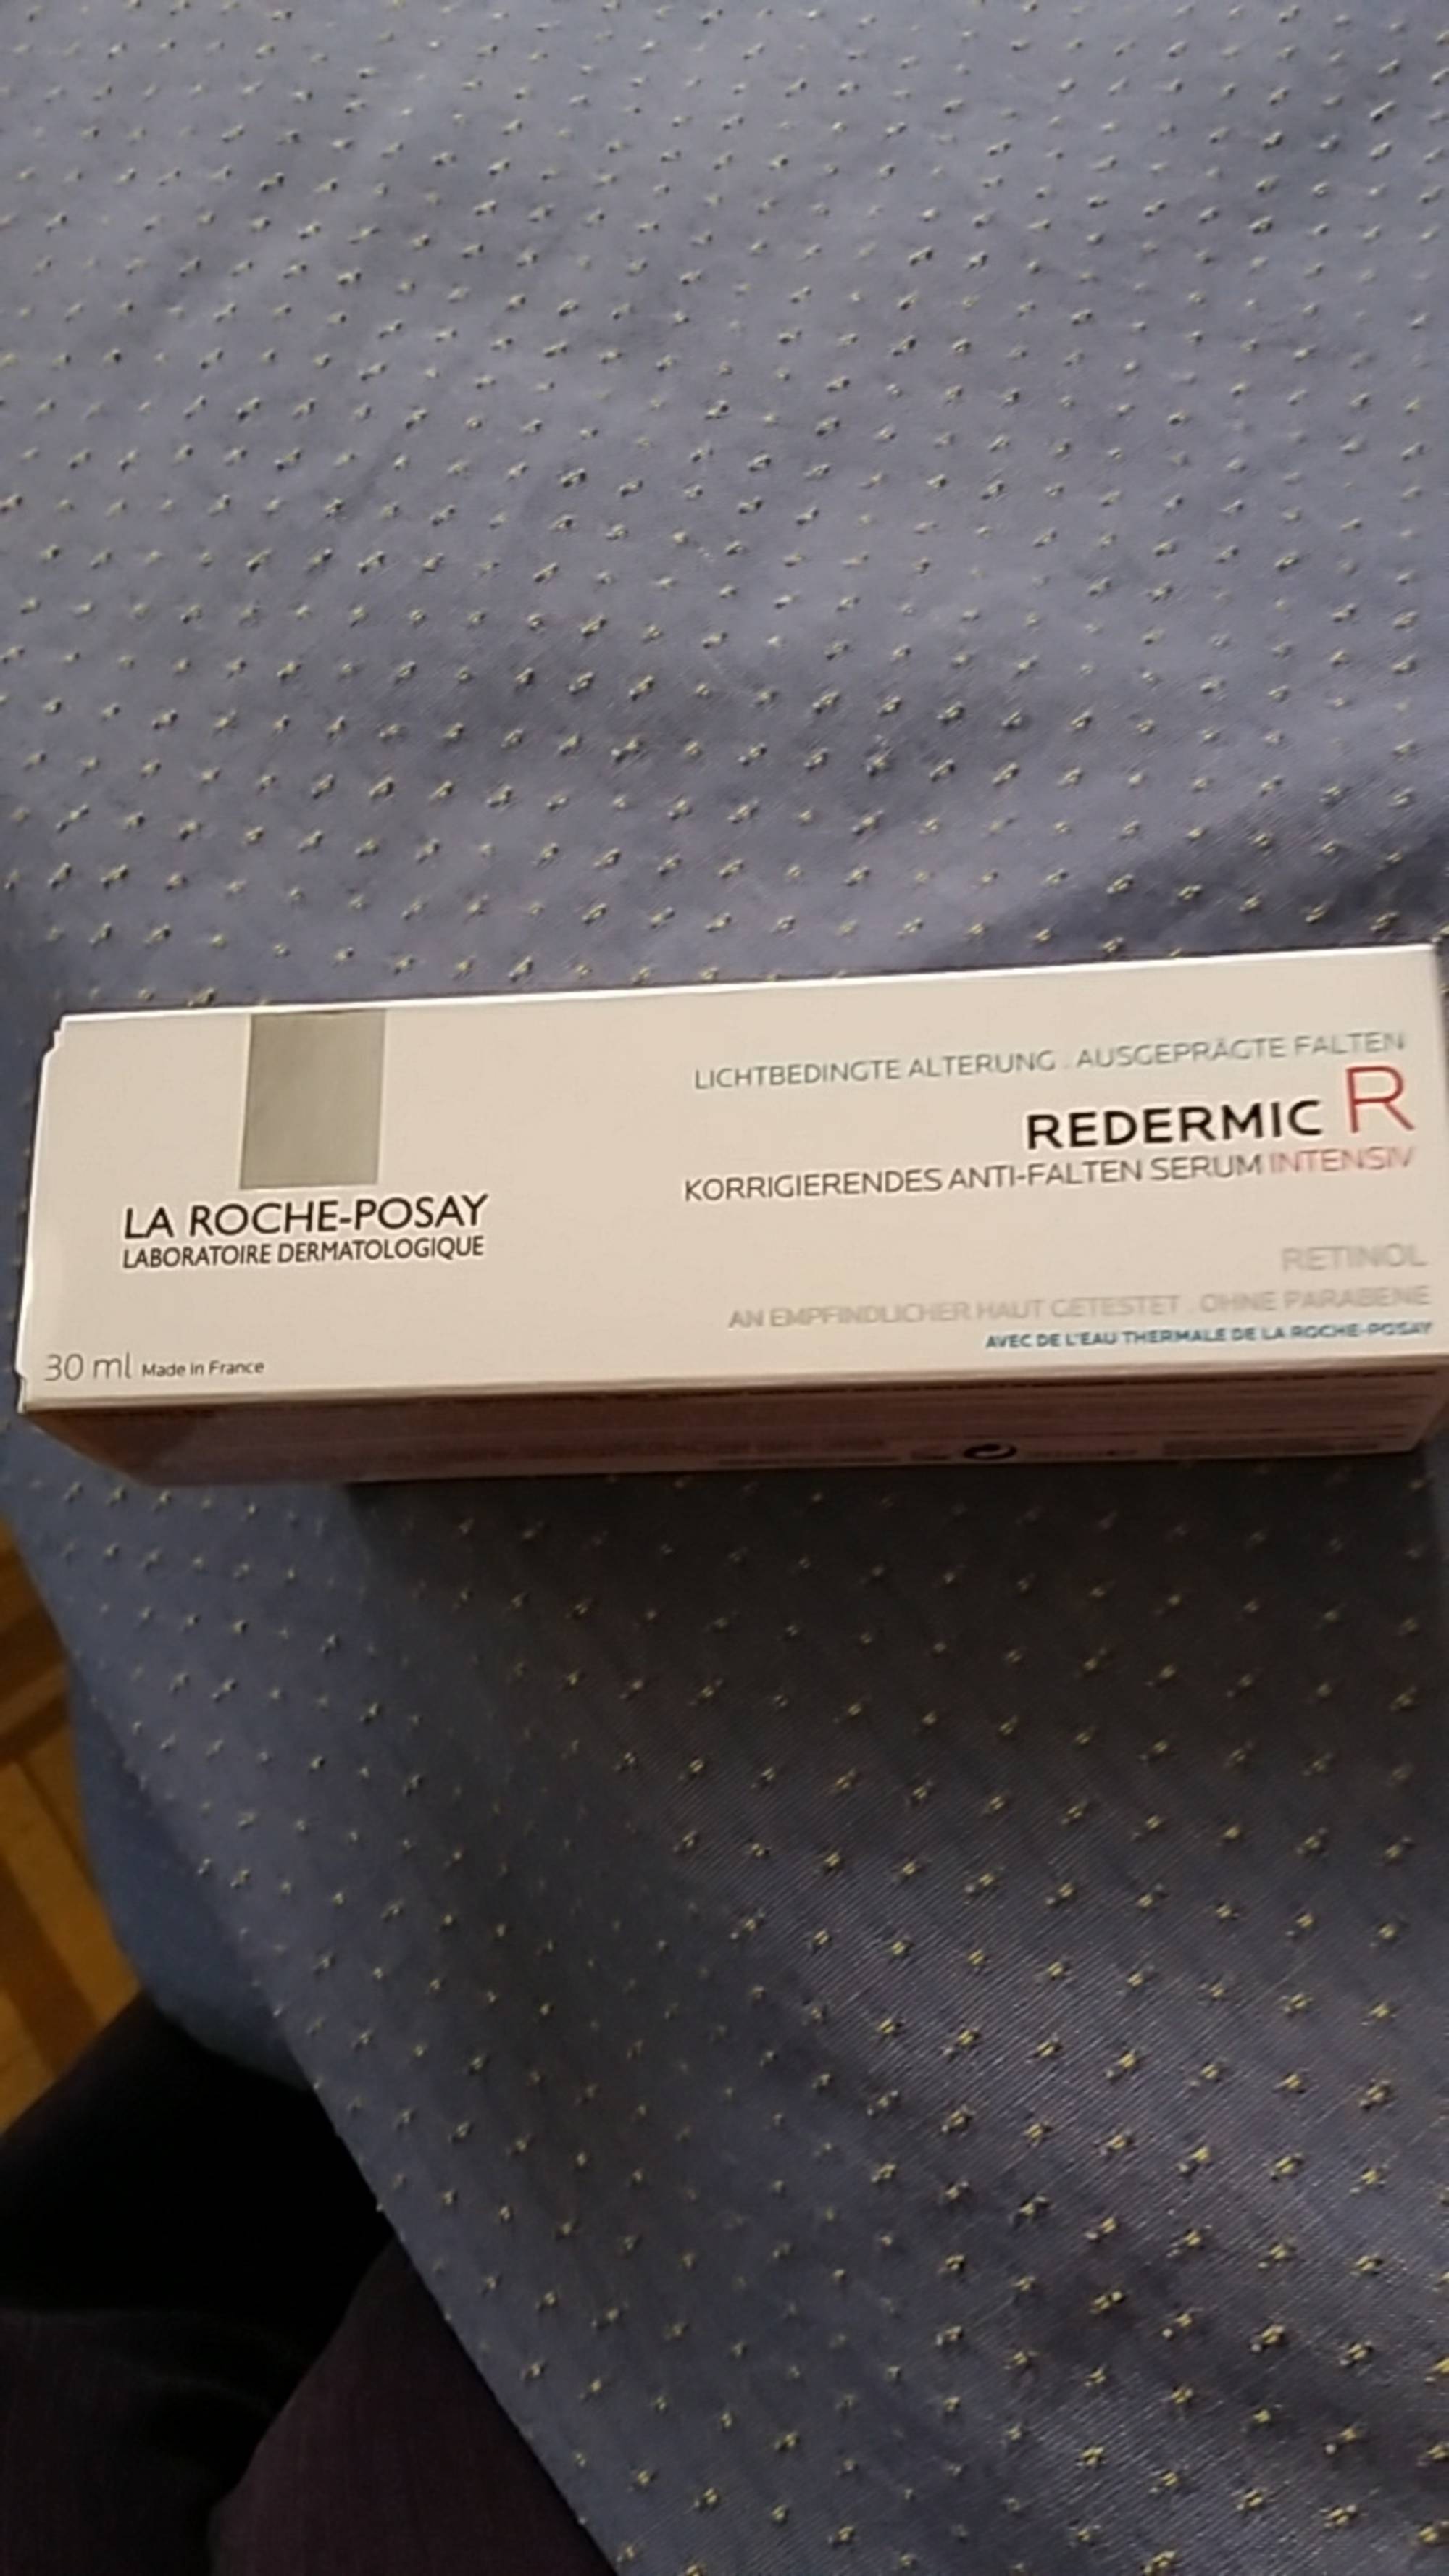 LA ROCHE-POSAY - Redermic R - Korrigierendes anti-falten serum